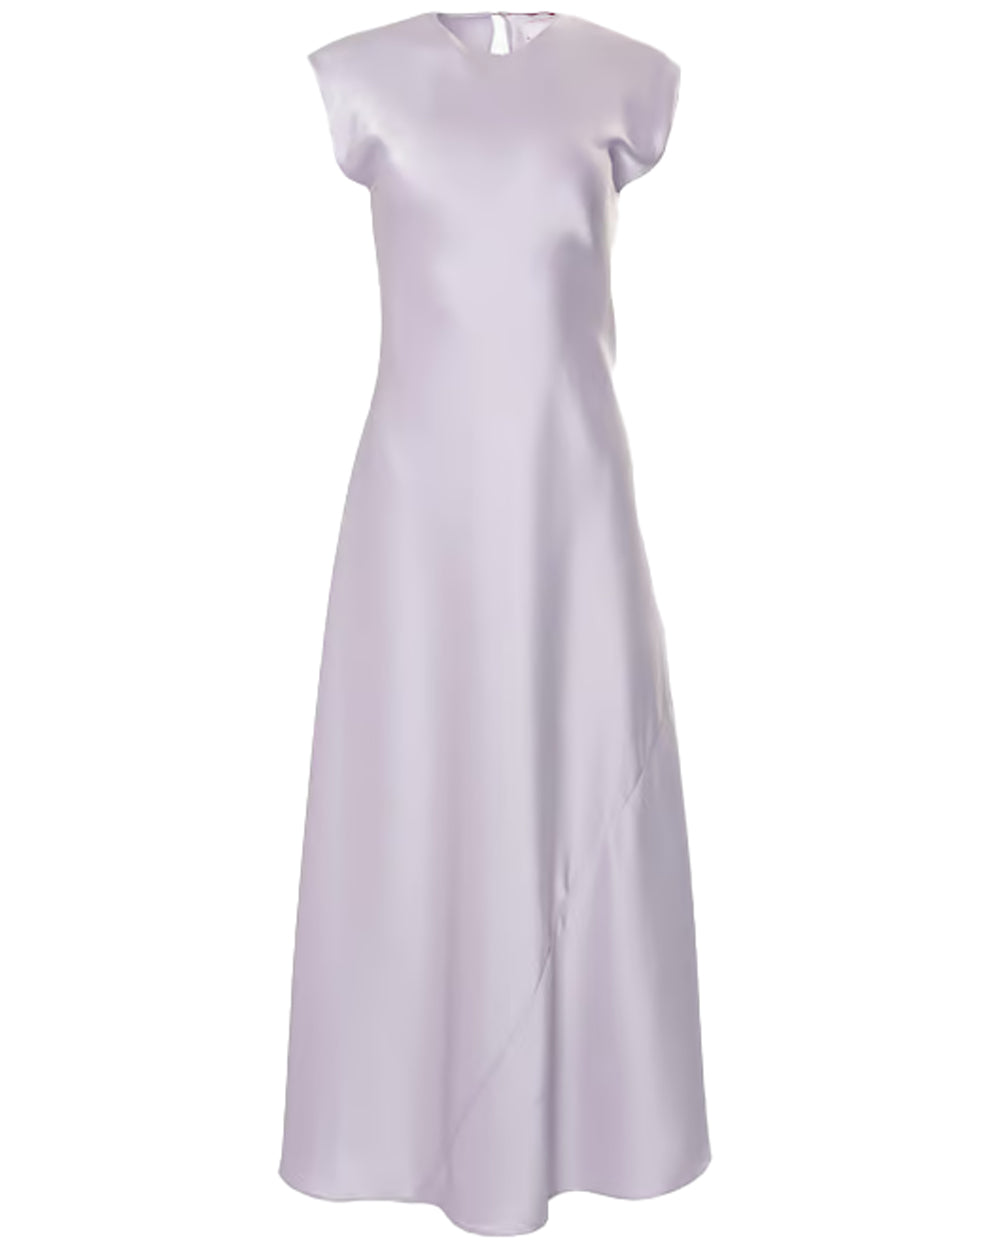 Lilac Satin Sleeveless Midi Dress